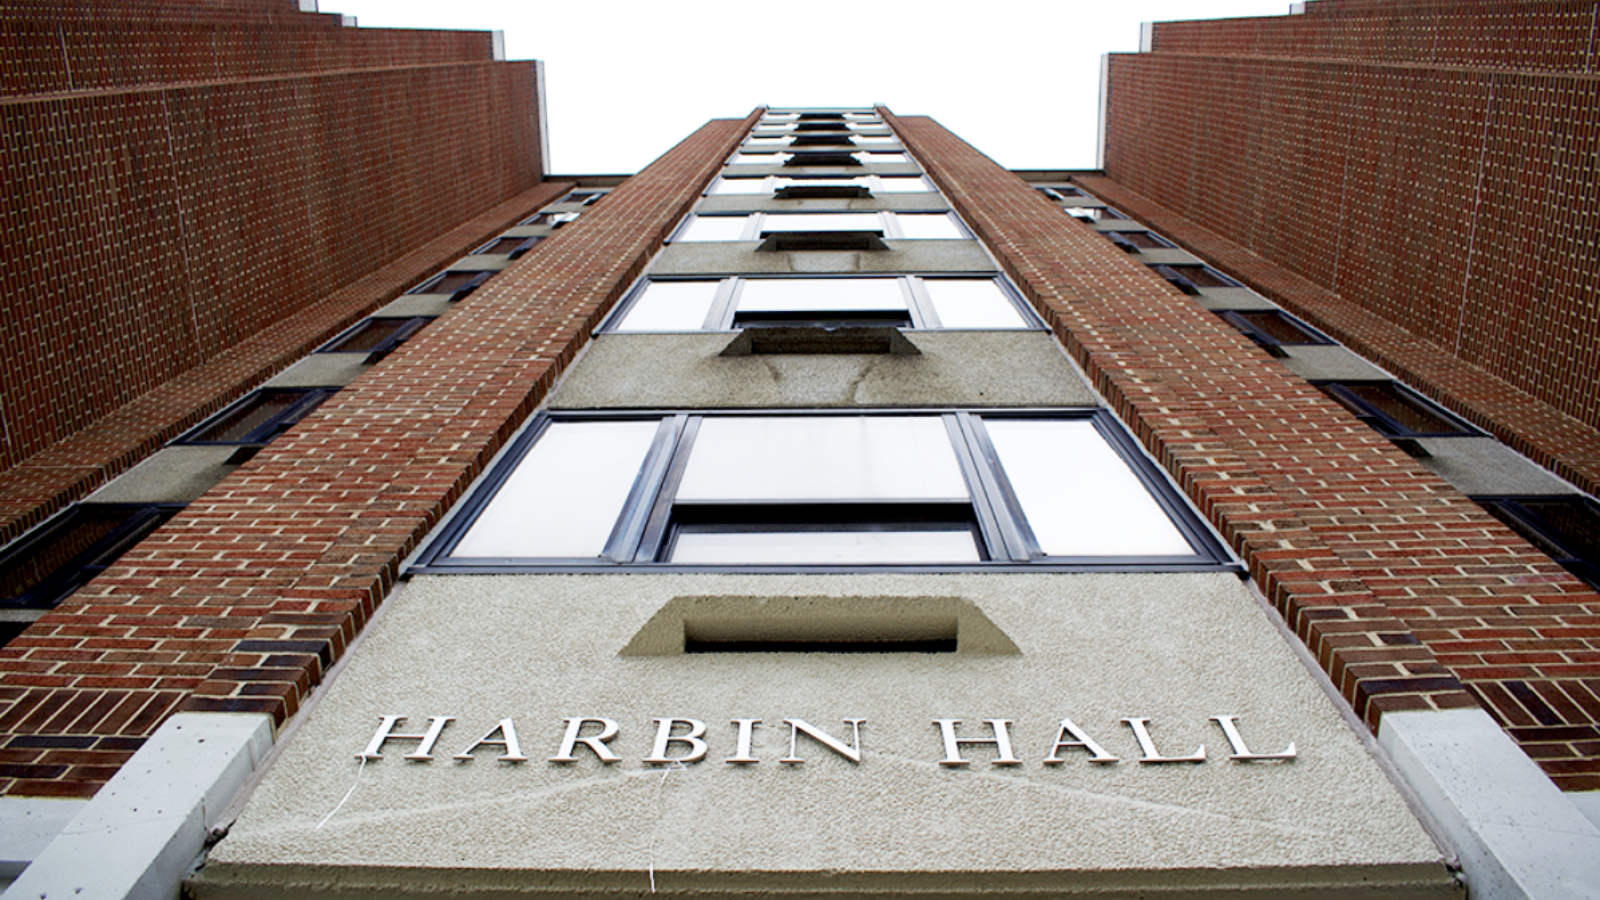 Worm eye photo of Harbin Hall